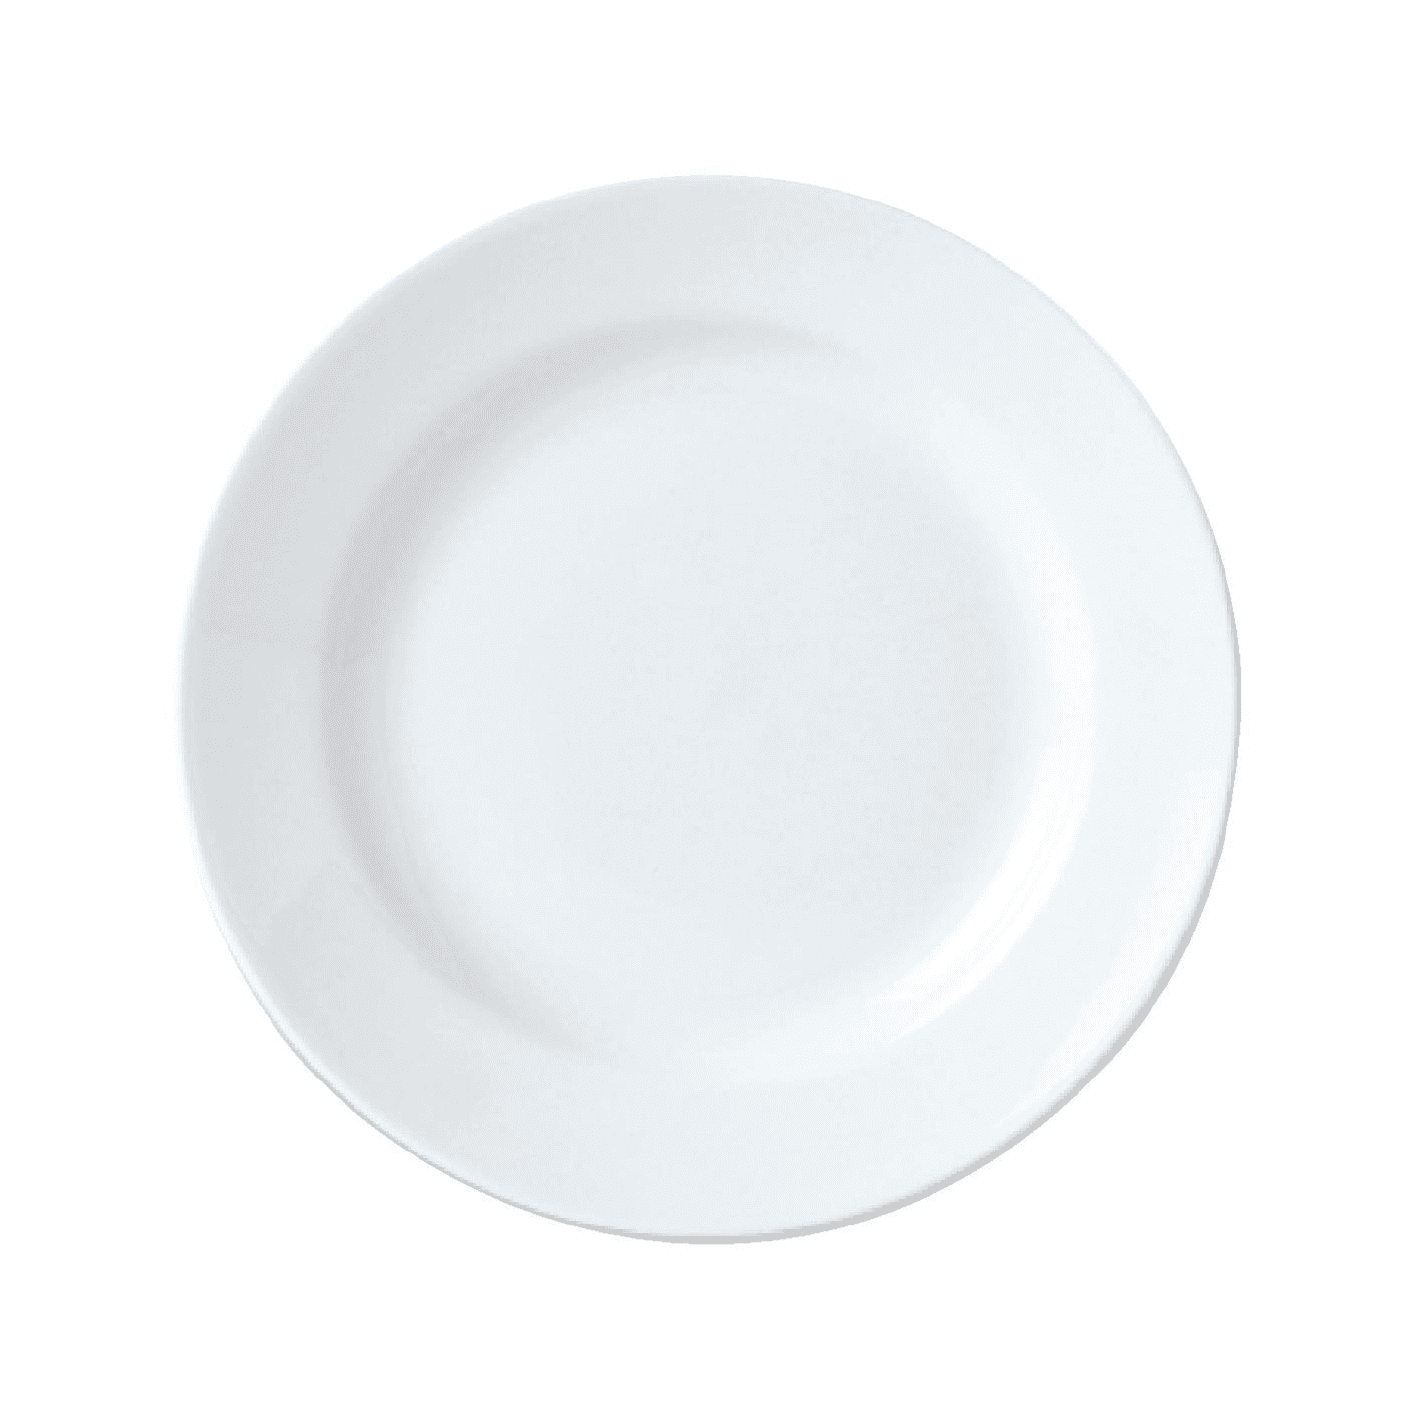 Steelite Simplicity White Harmony Plates 300mm (Pack of 12)